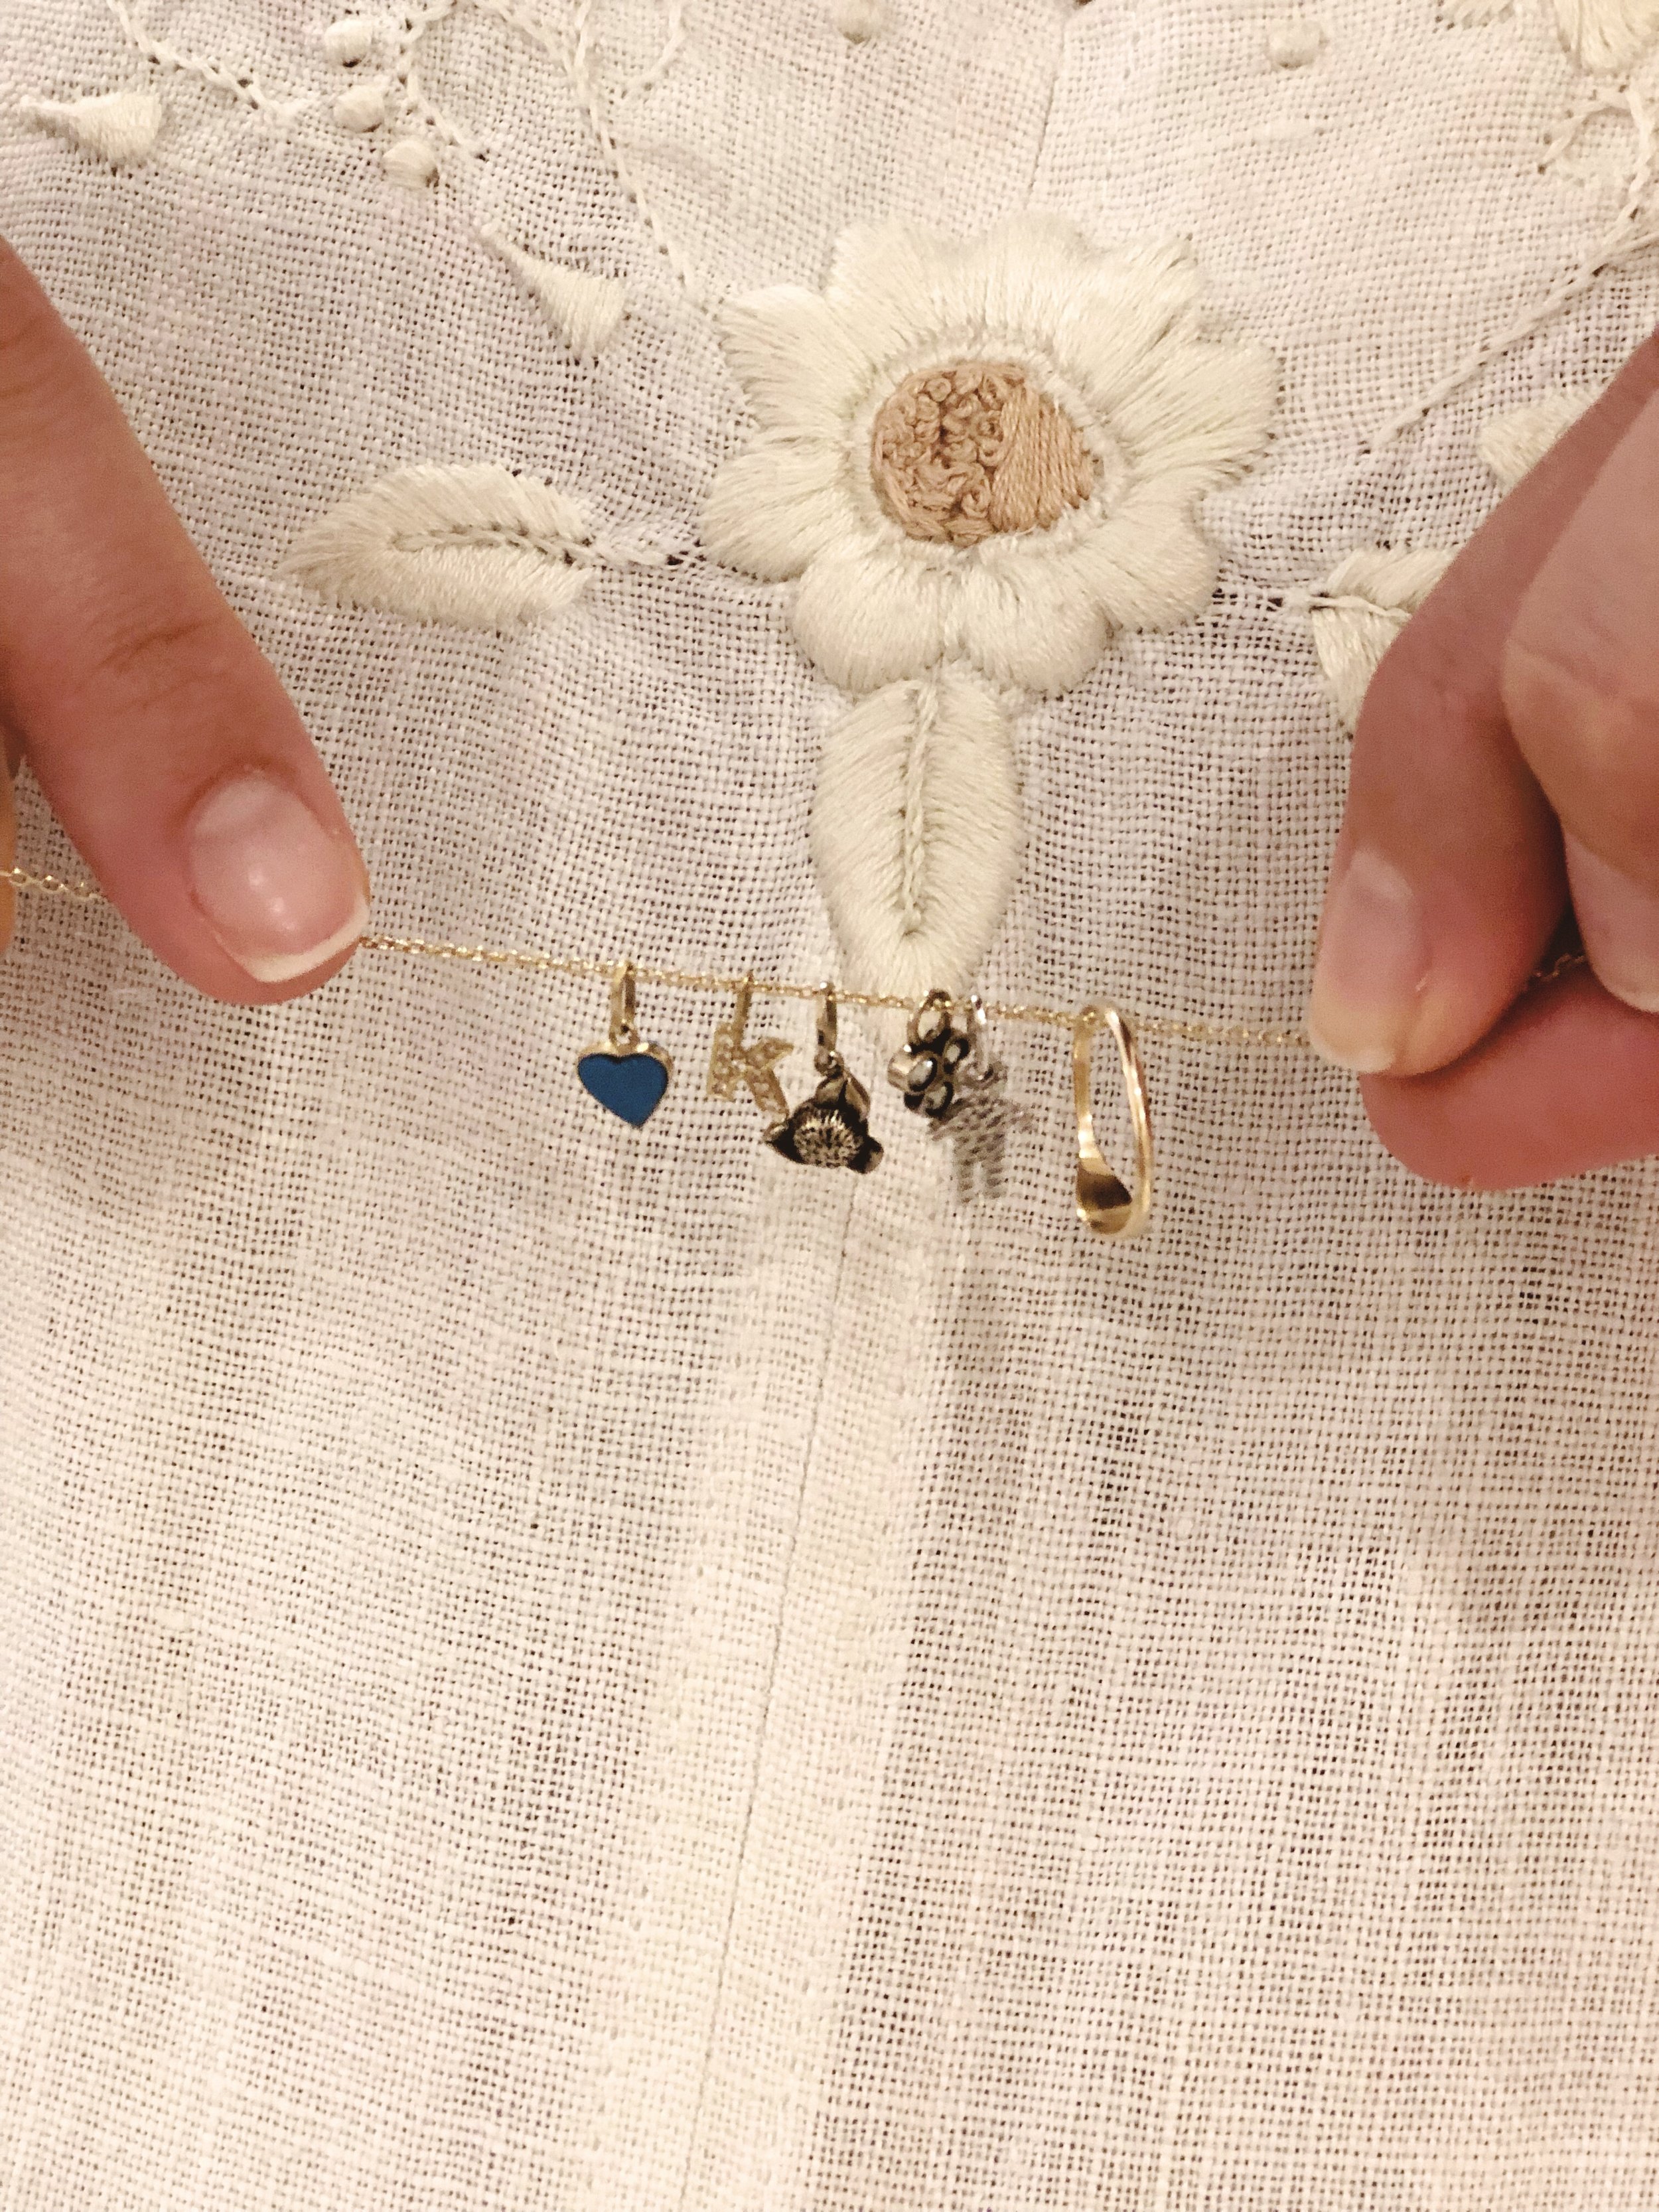 ACS 0458 - Family Jewelry: Os amuletos da designer de joias Karina Olsen